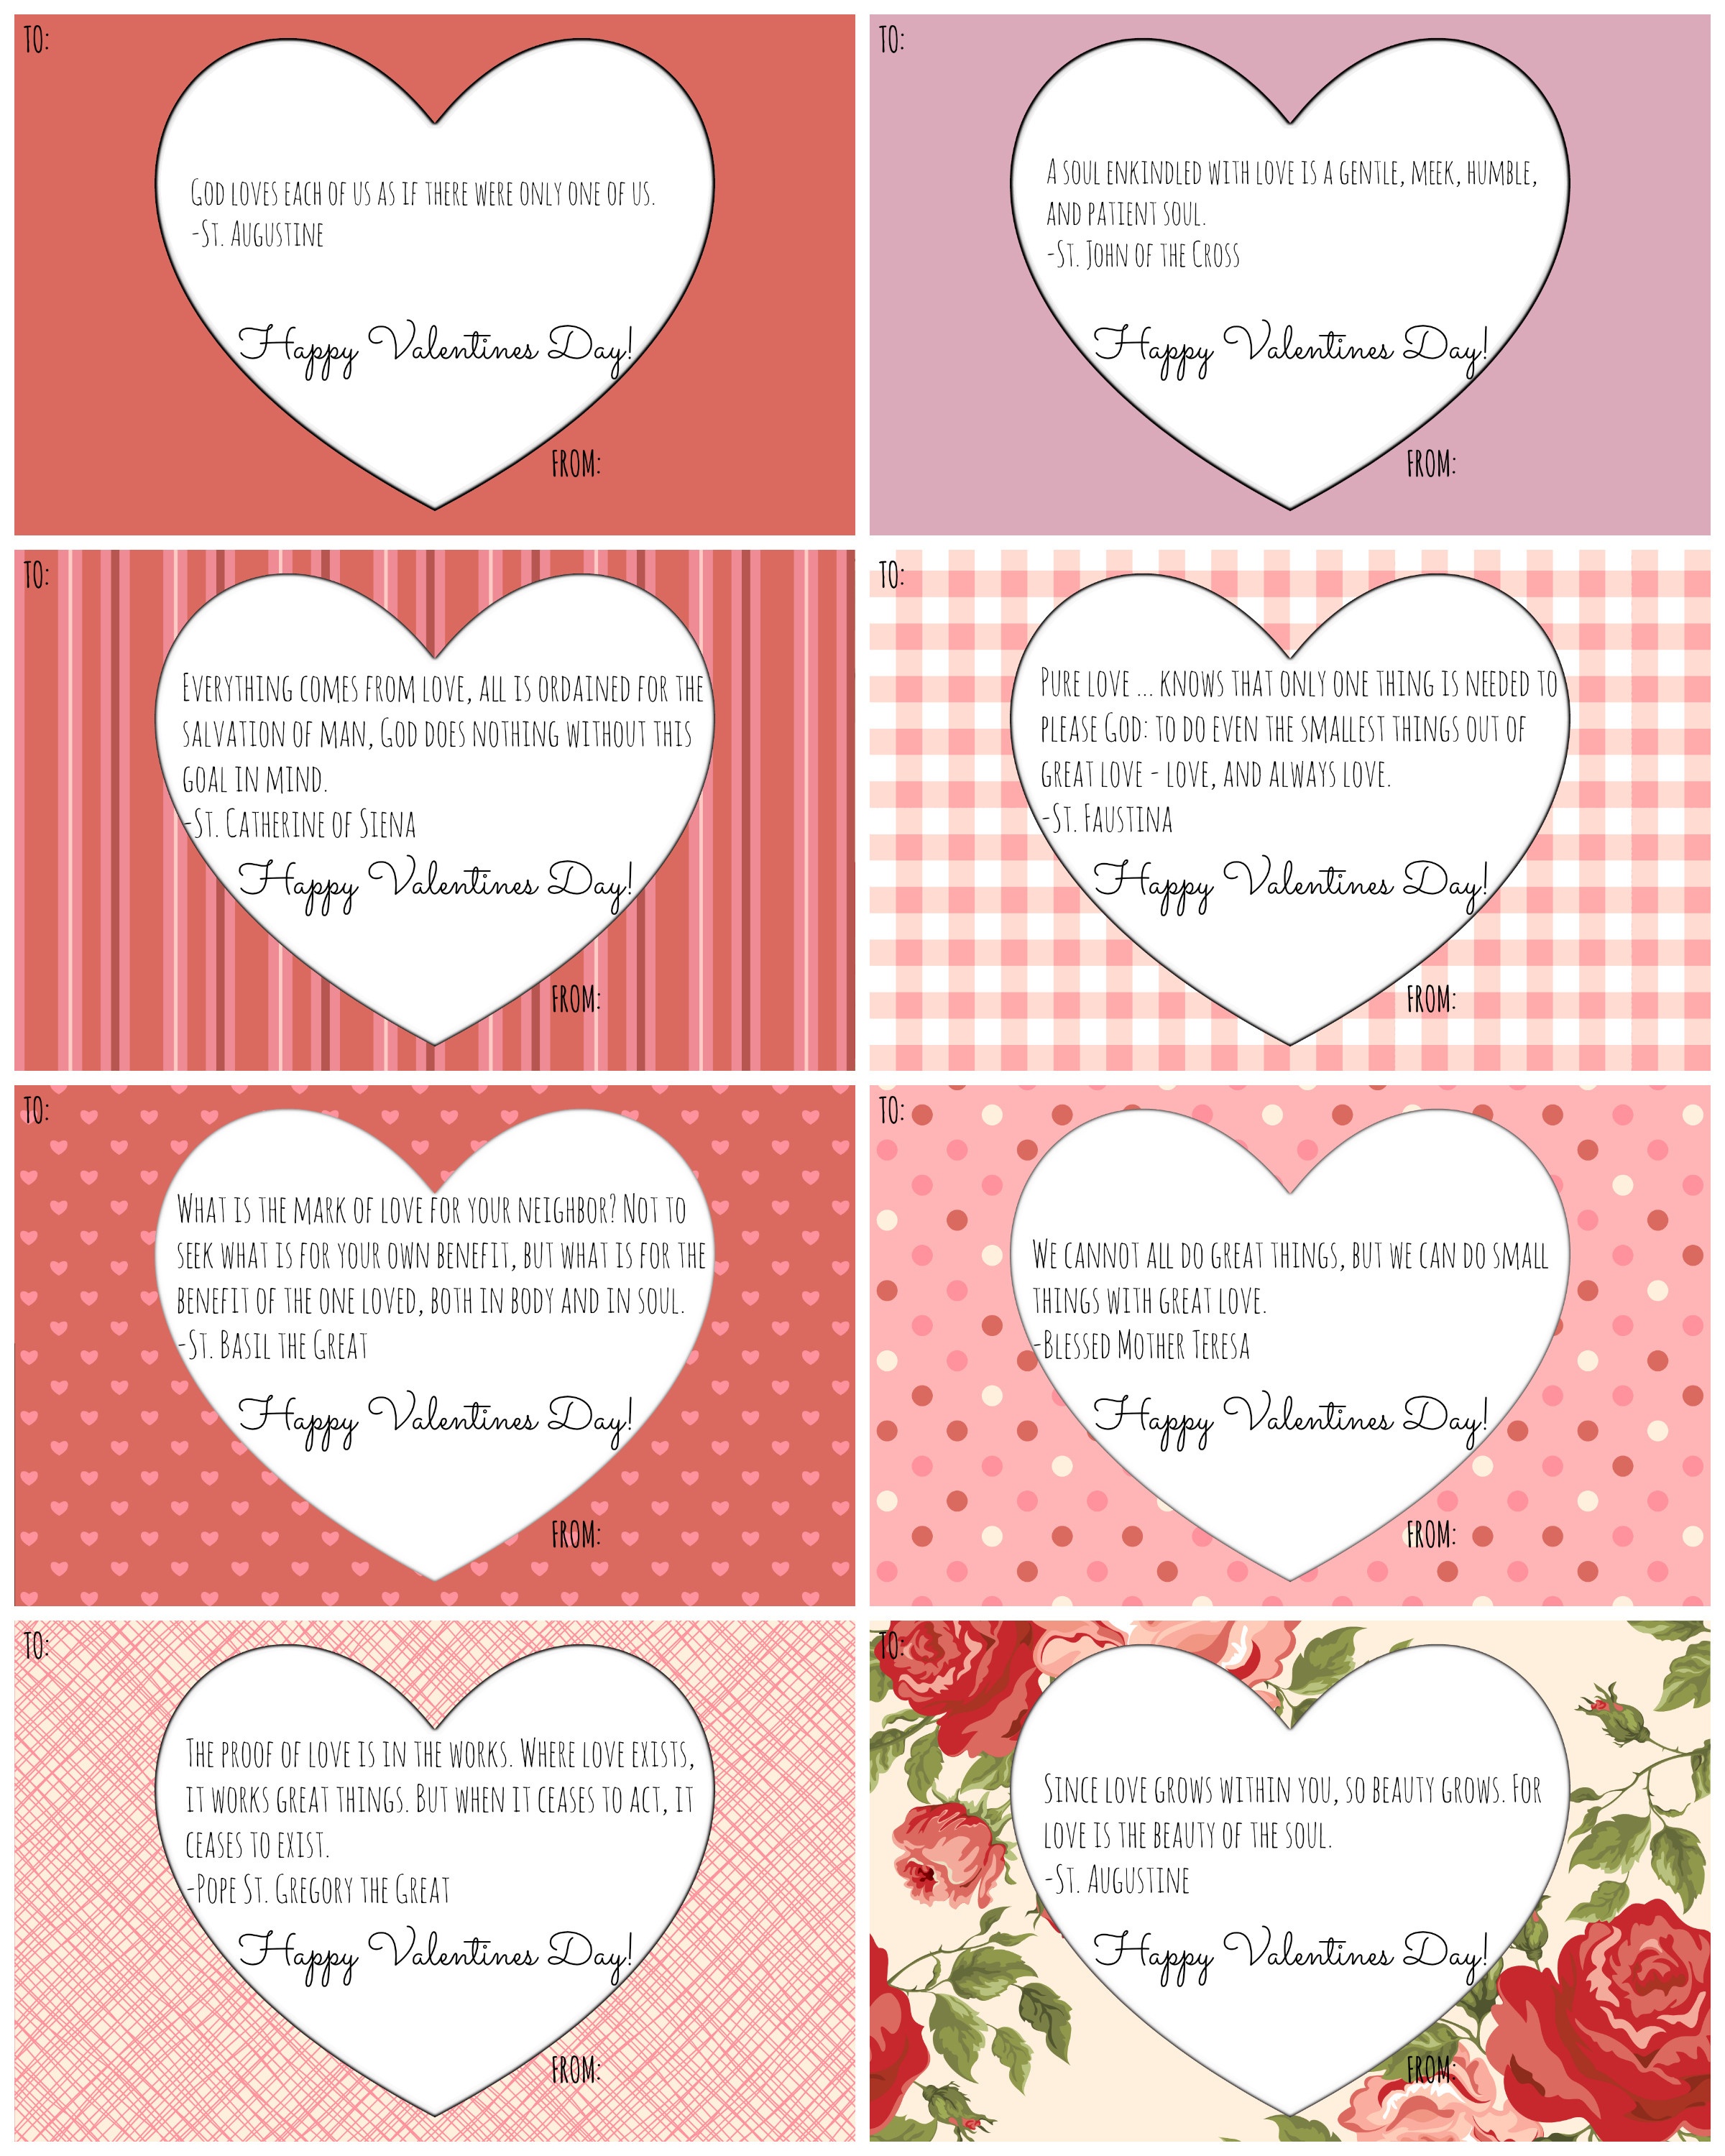 Catholic Valentine Cards: Free Printables! - California To Korea - Valentine Free Printable Cards